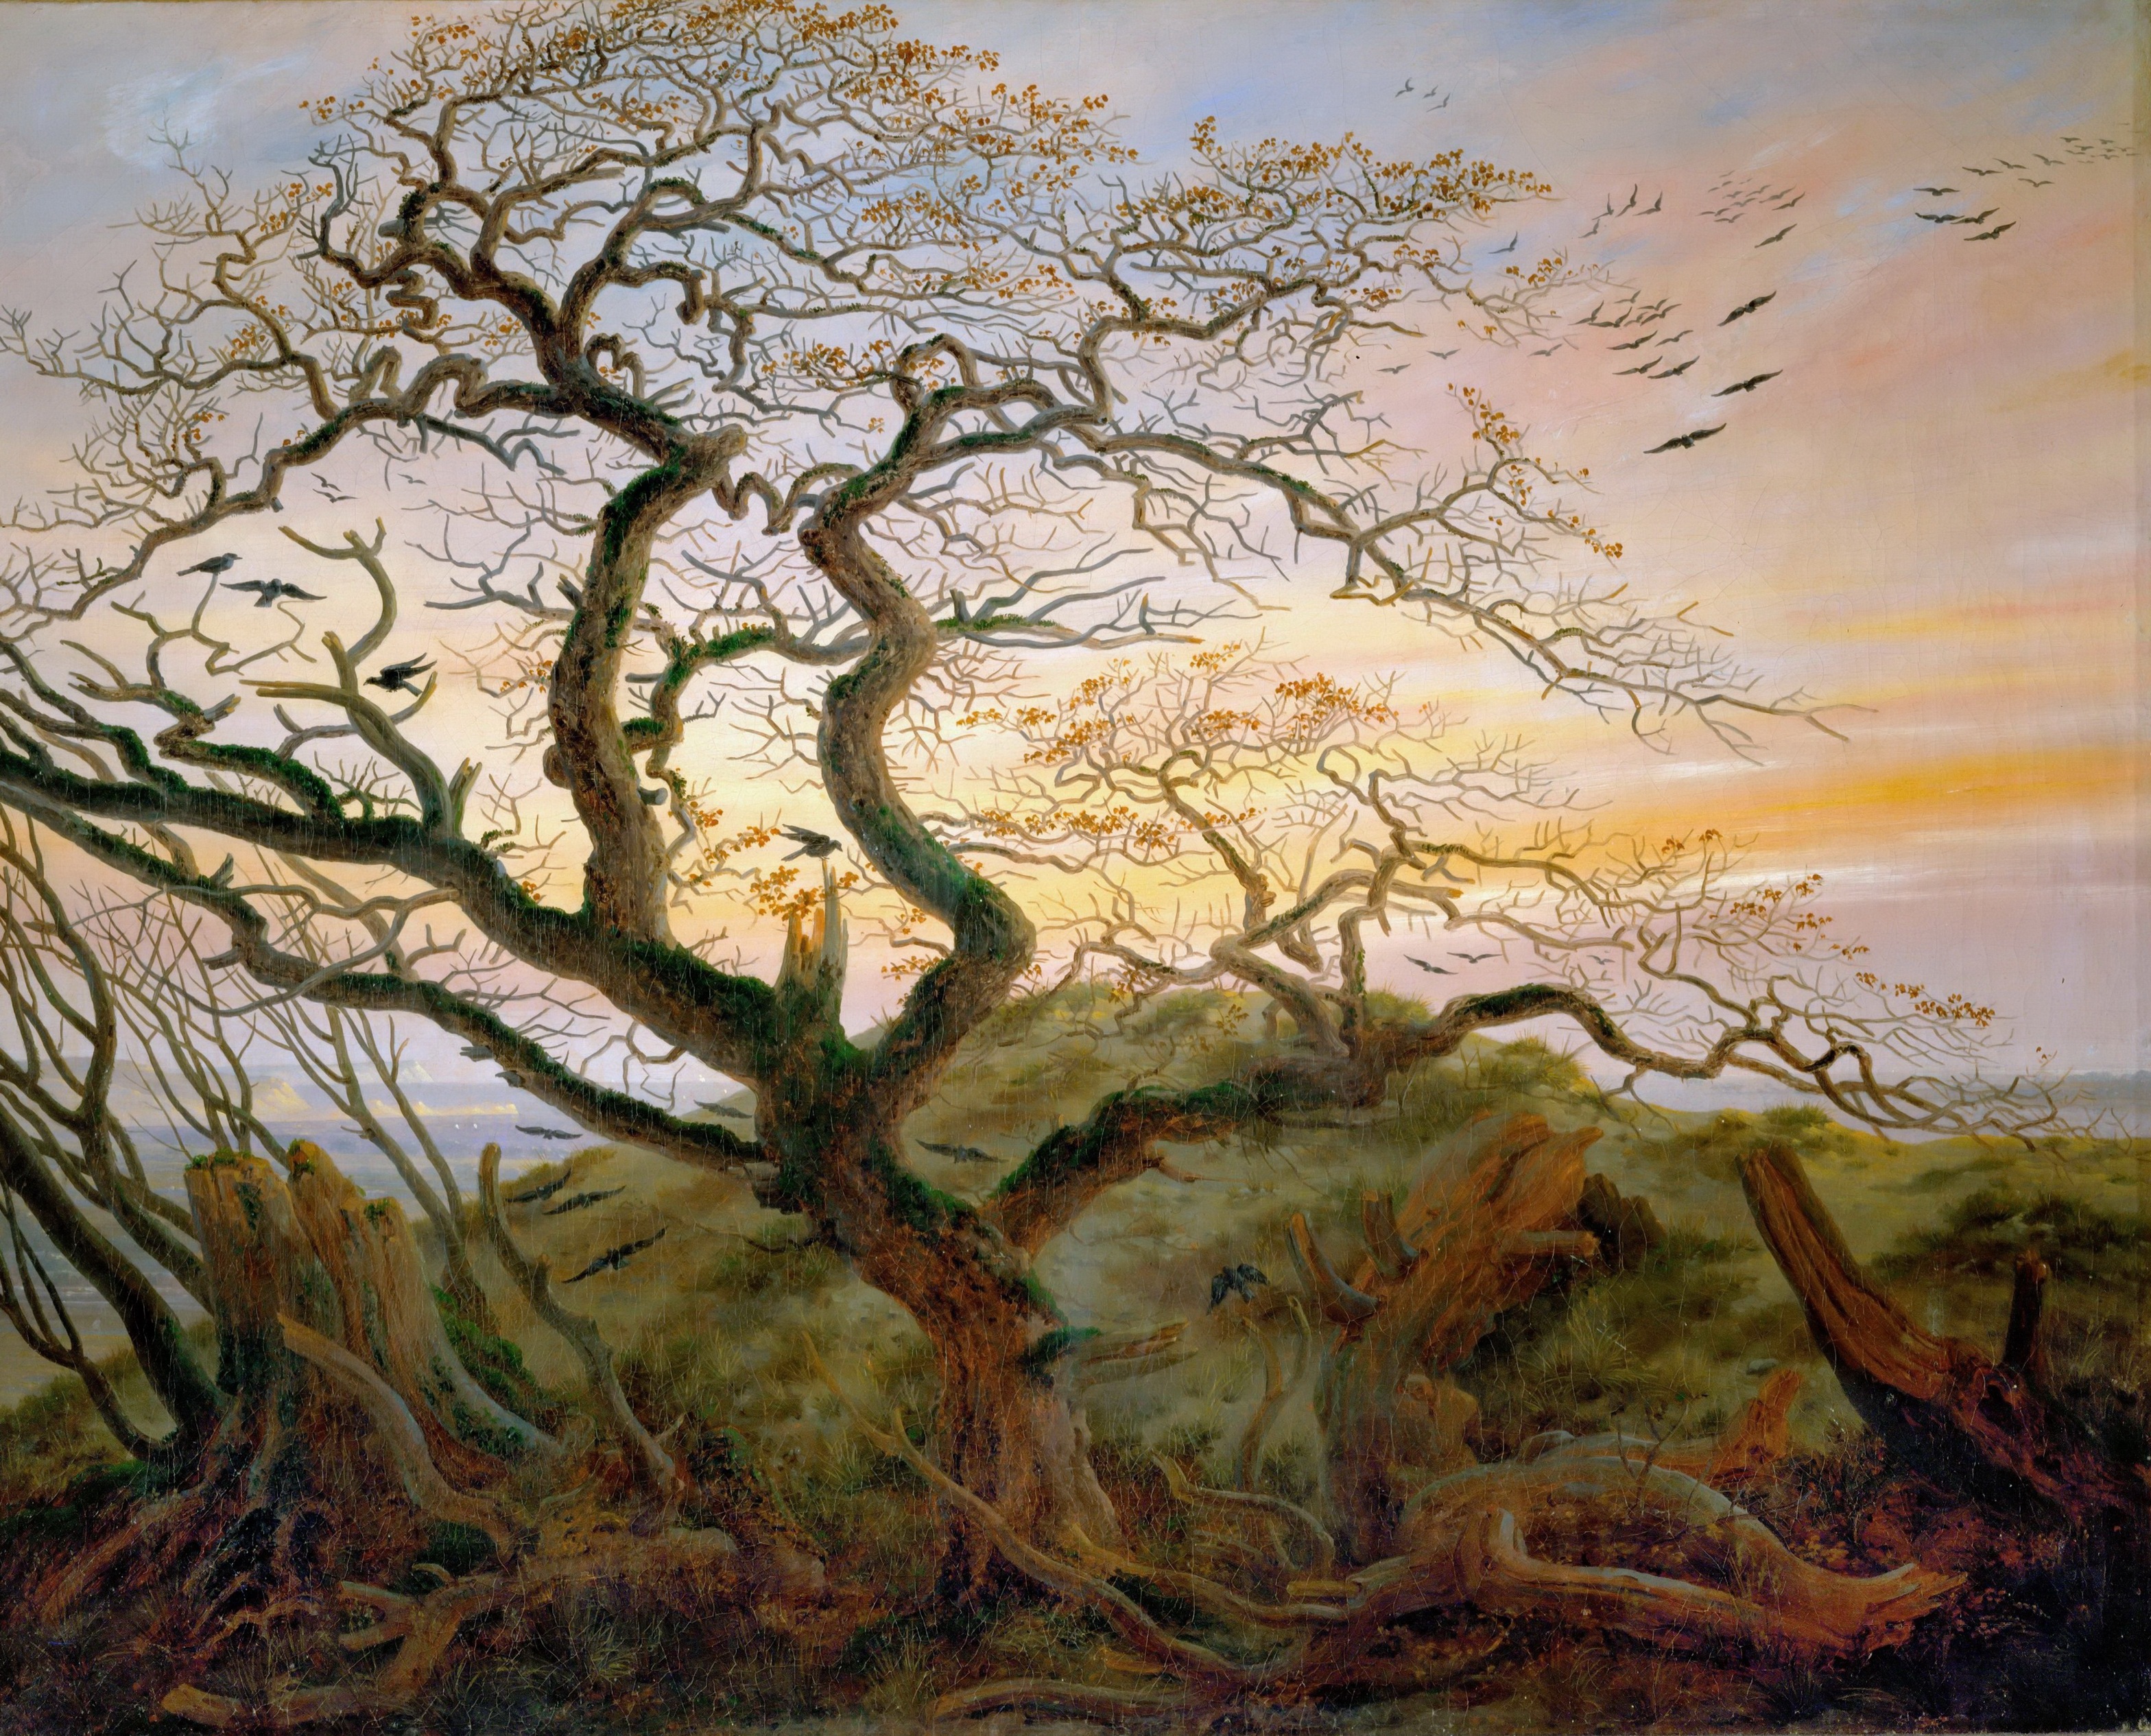 File:Caspar David Friedrich The Tree of Crows.jpg - Wikimedia Commons